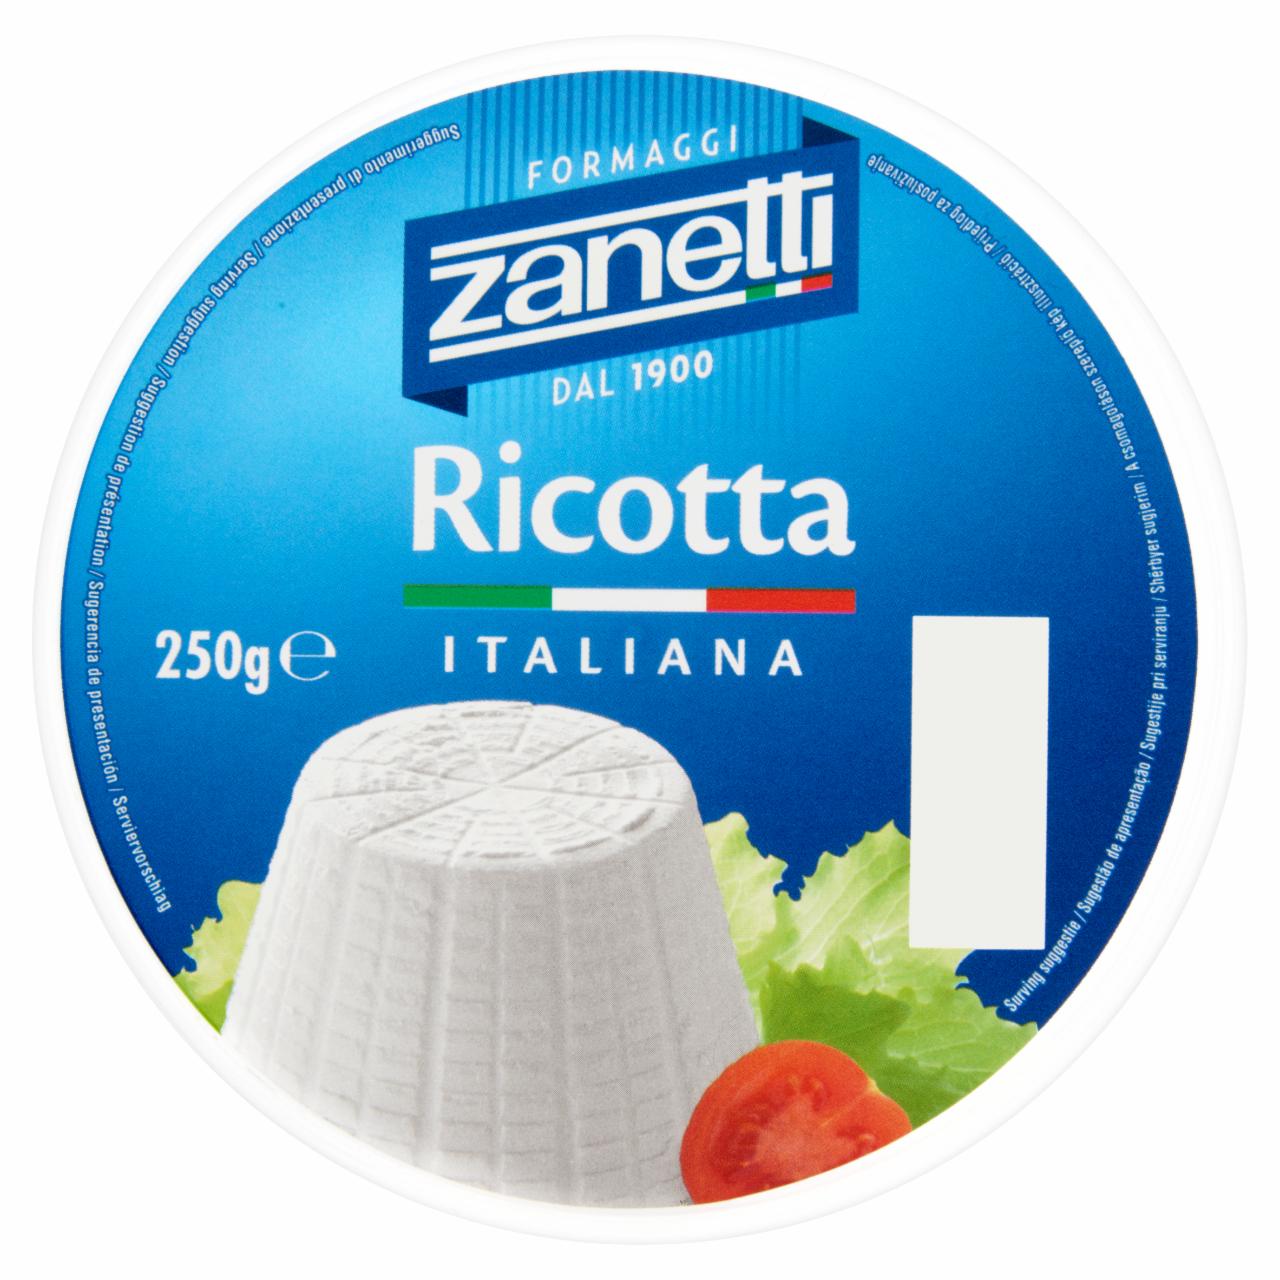 Képek - Zanetti Ricotta tejszínes savósajt 250 g